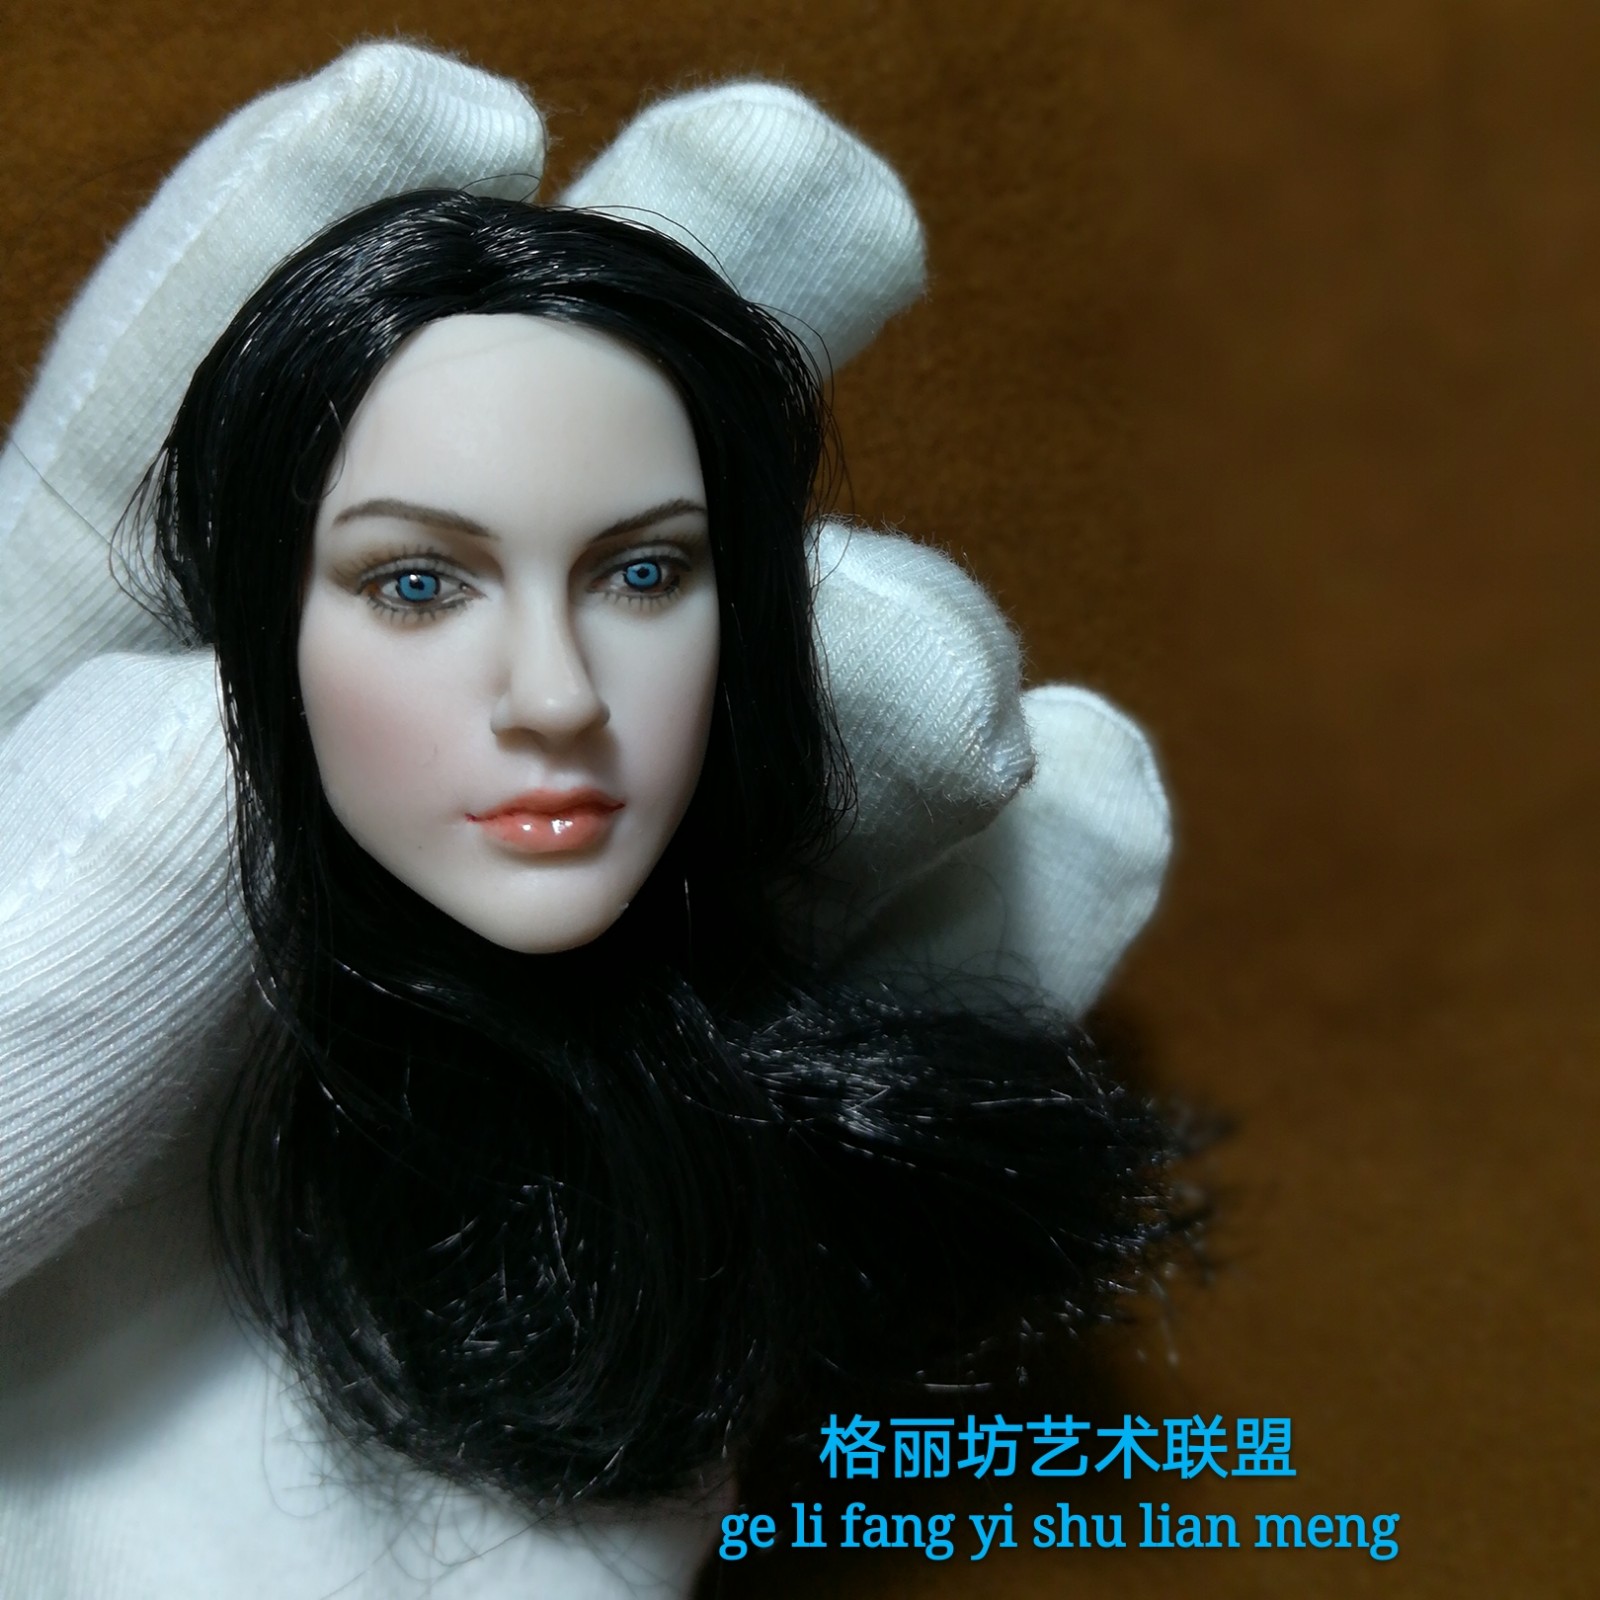 glf1/6中欧混血儿美女植发头雕L——4白肤色蓝眼睛黑色发型洋娃娃